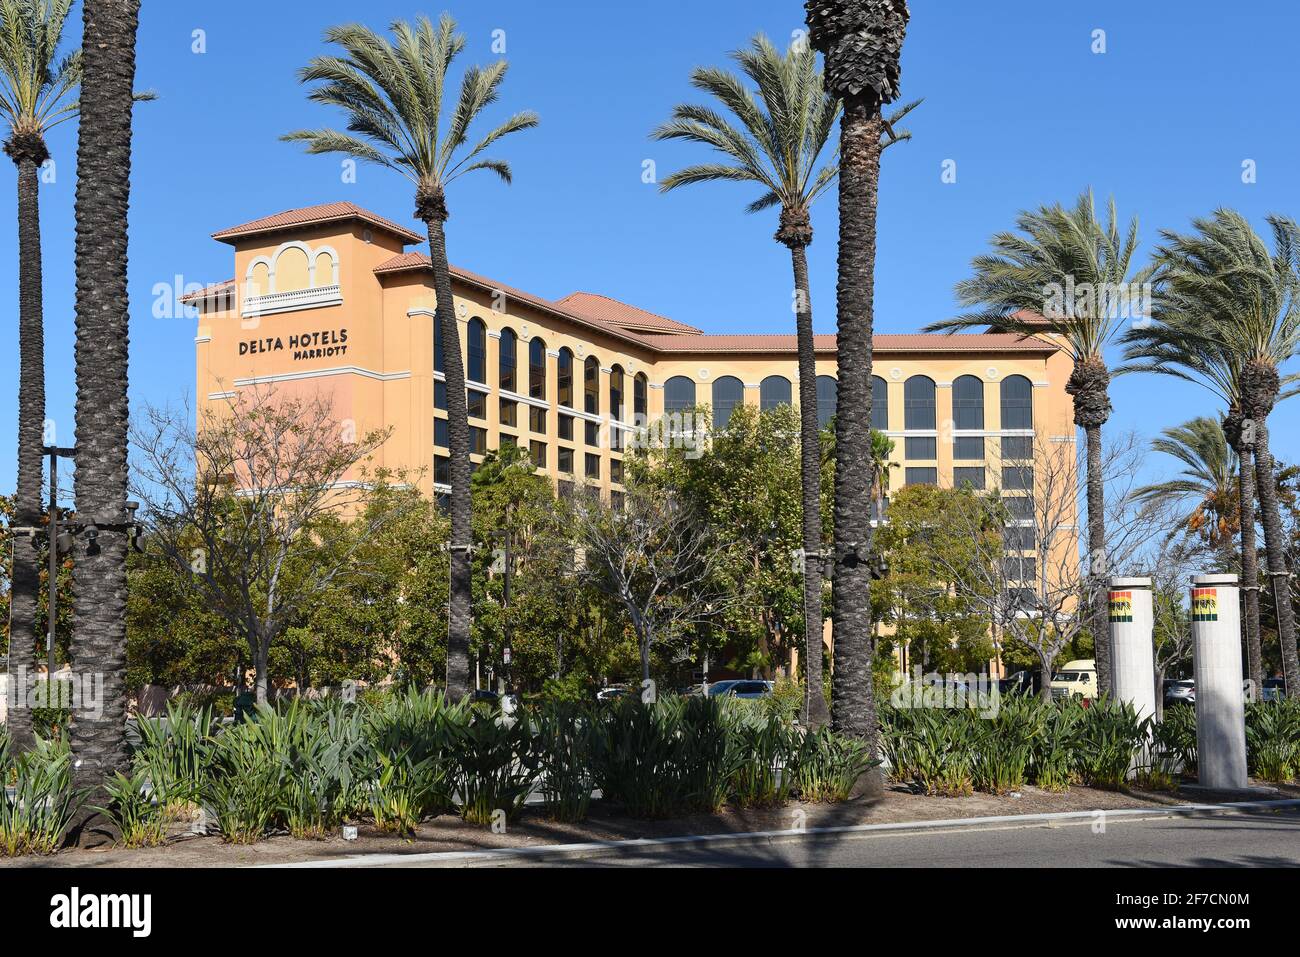 GARDEN GROVE, CALIFORNIA - 31 MAR 2021: Delta Hotels Marriot on Harbour Boulevard nell'area di Anaheim Resort. Foto Stock